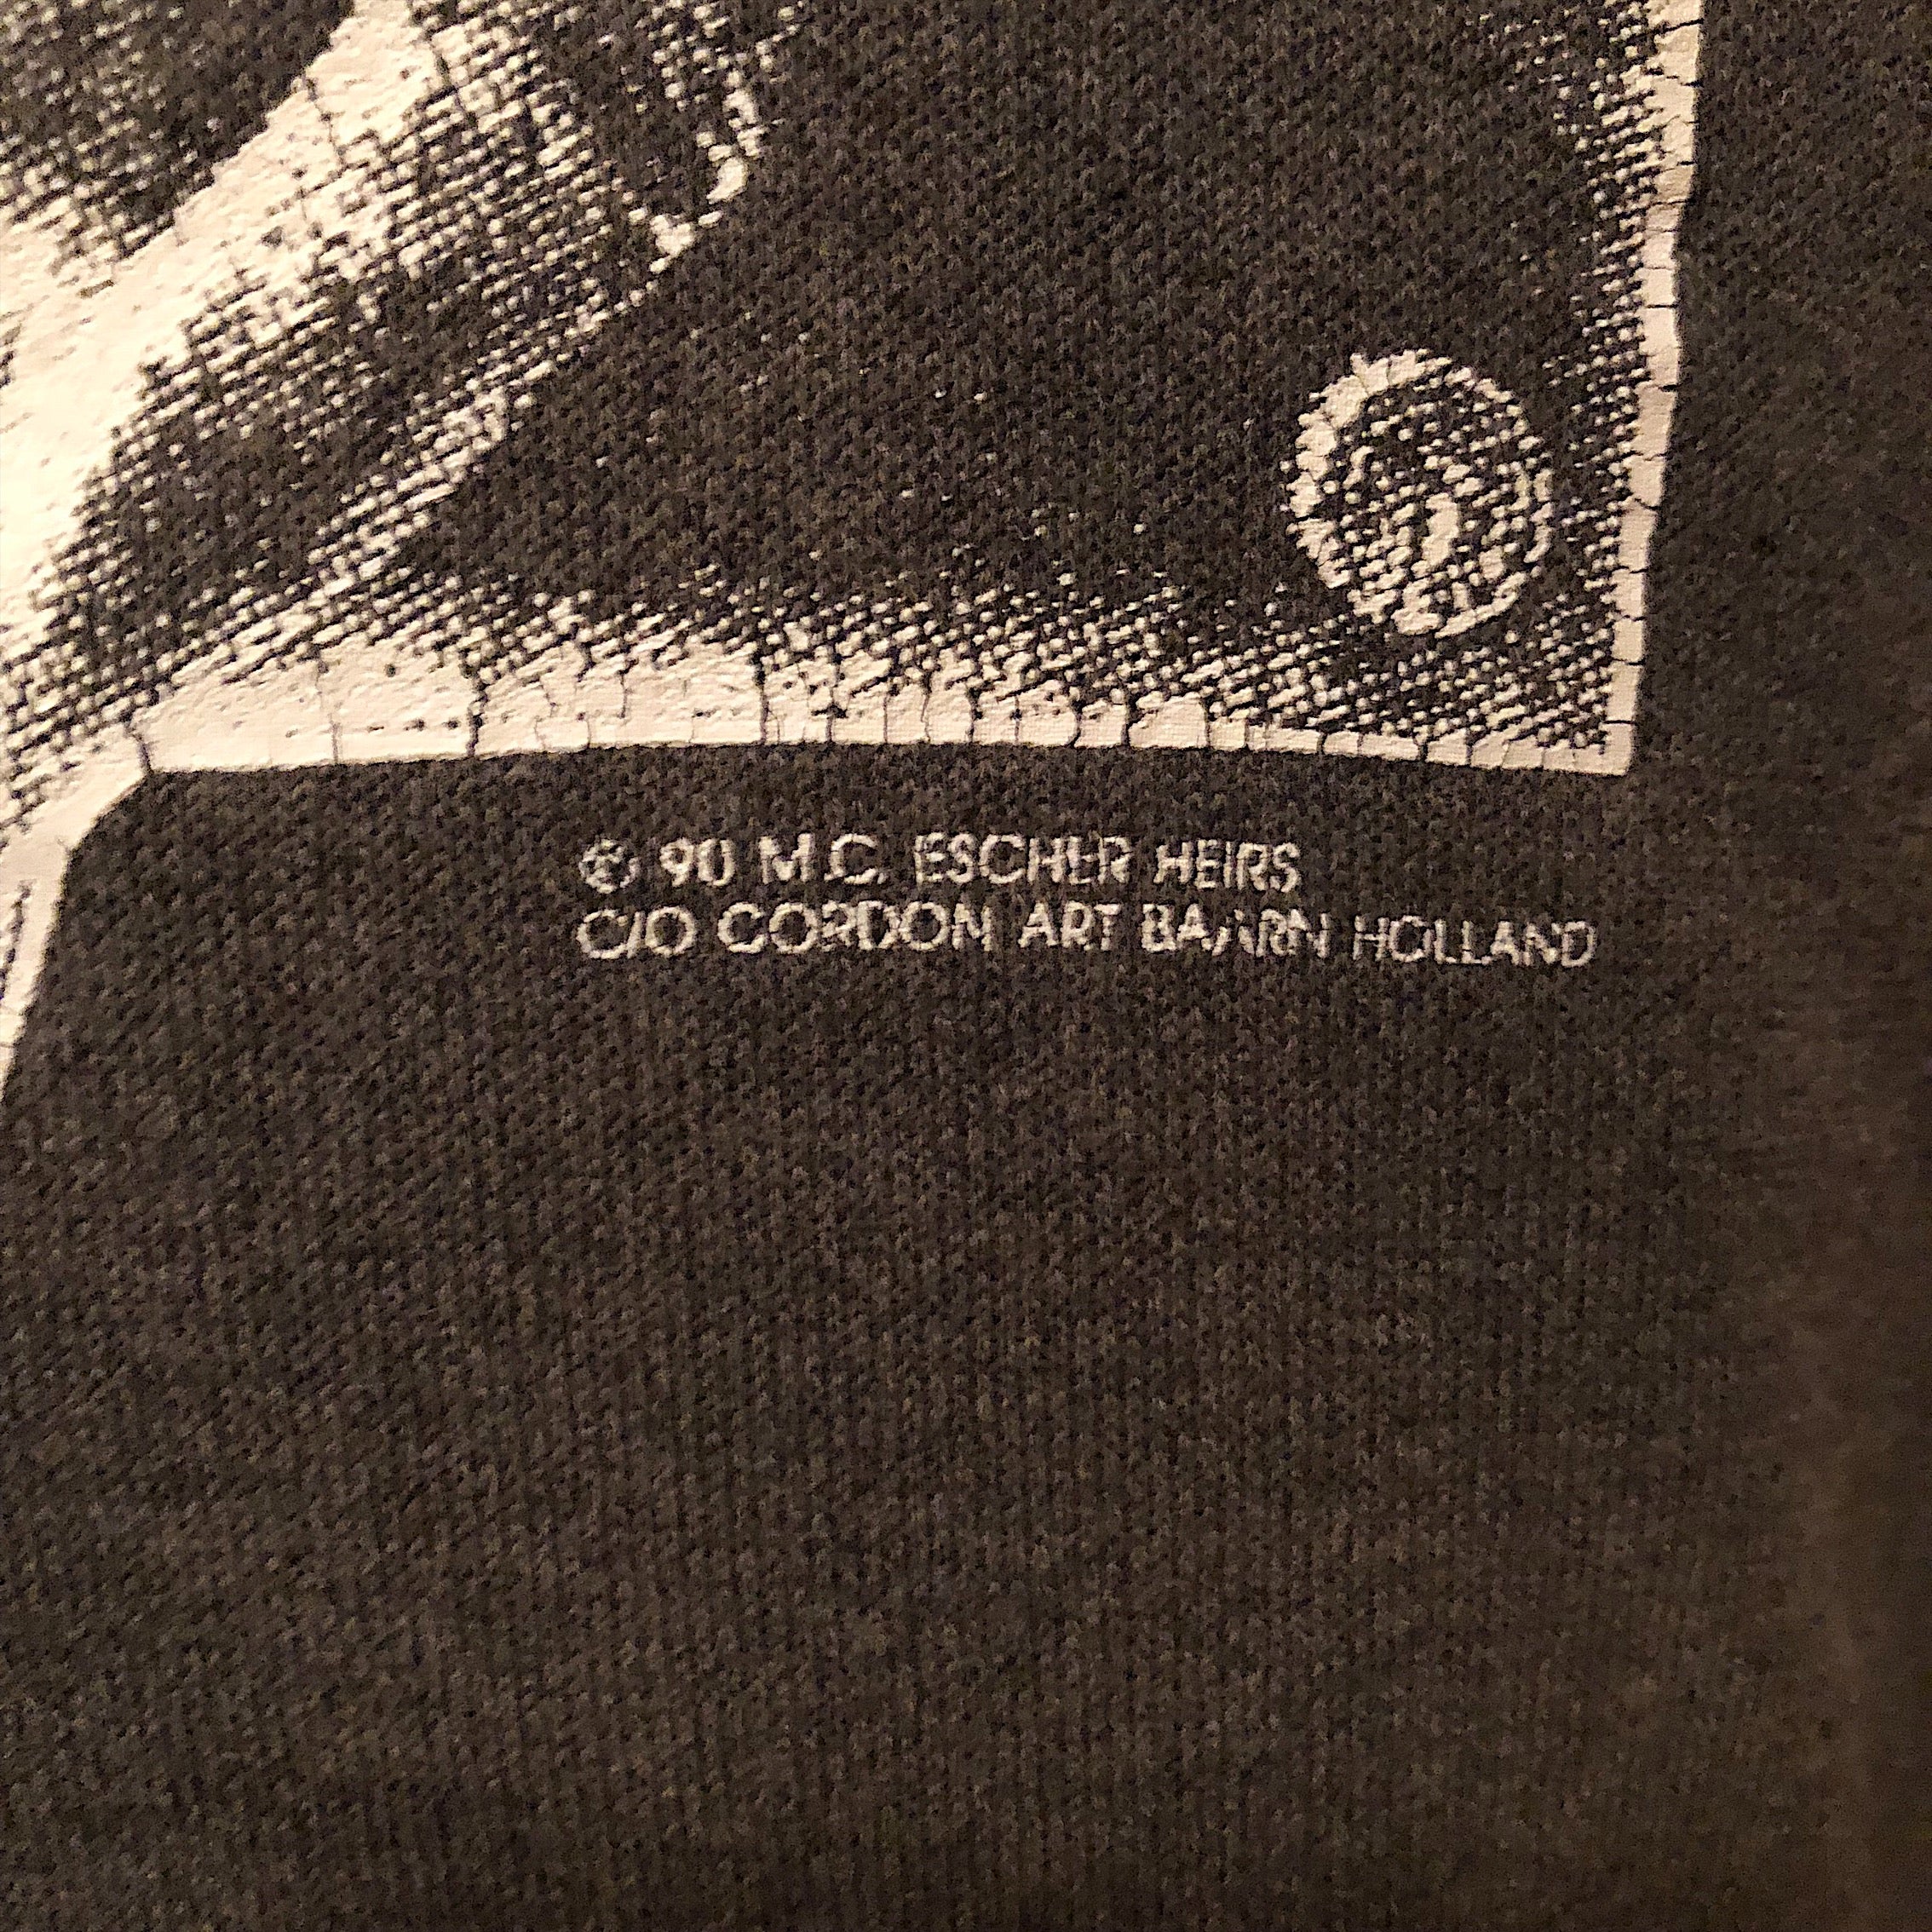 Rare M.C. Escher Sweatshirt of Drawing Hands - XL - 1991 - C/0 Cordon Art Baarn Holland - Vintage Clothing